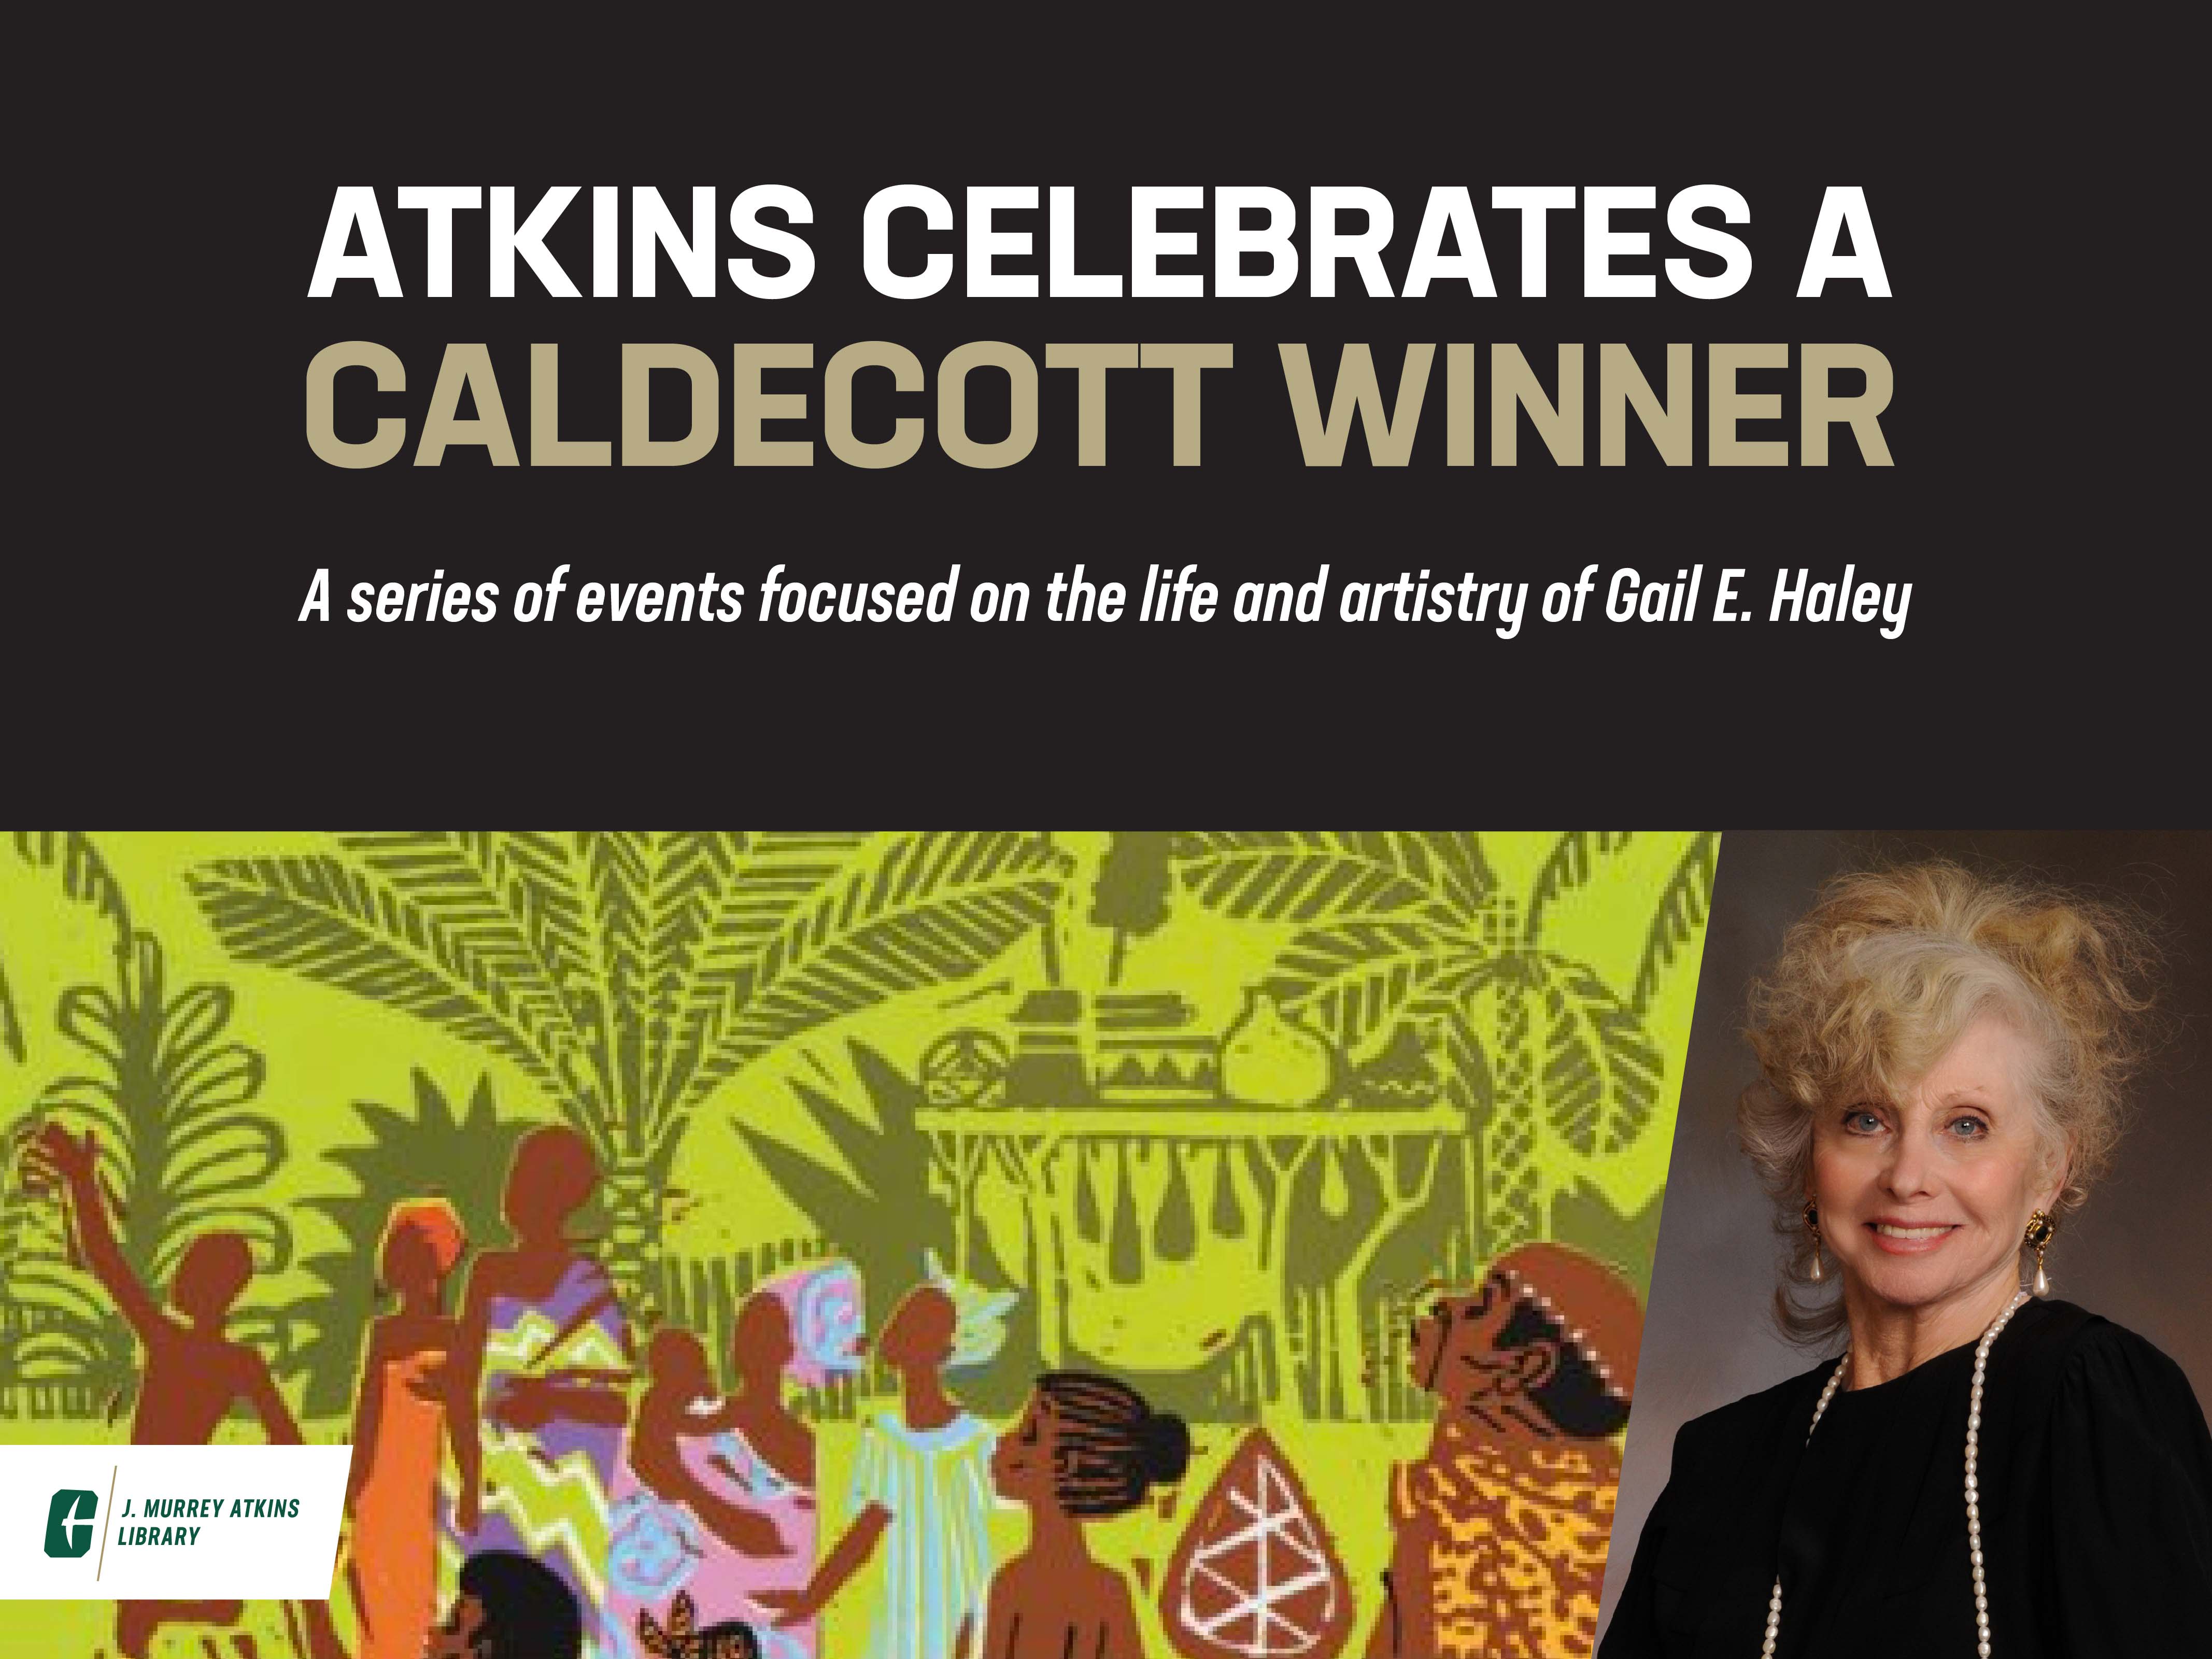 Atkins celebrates a Caldecott winner J. Murrey Atkins Library